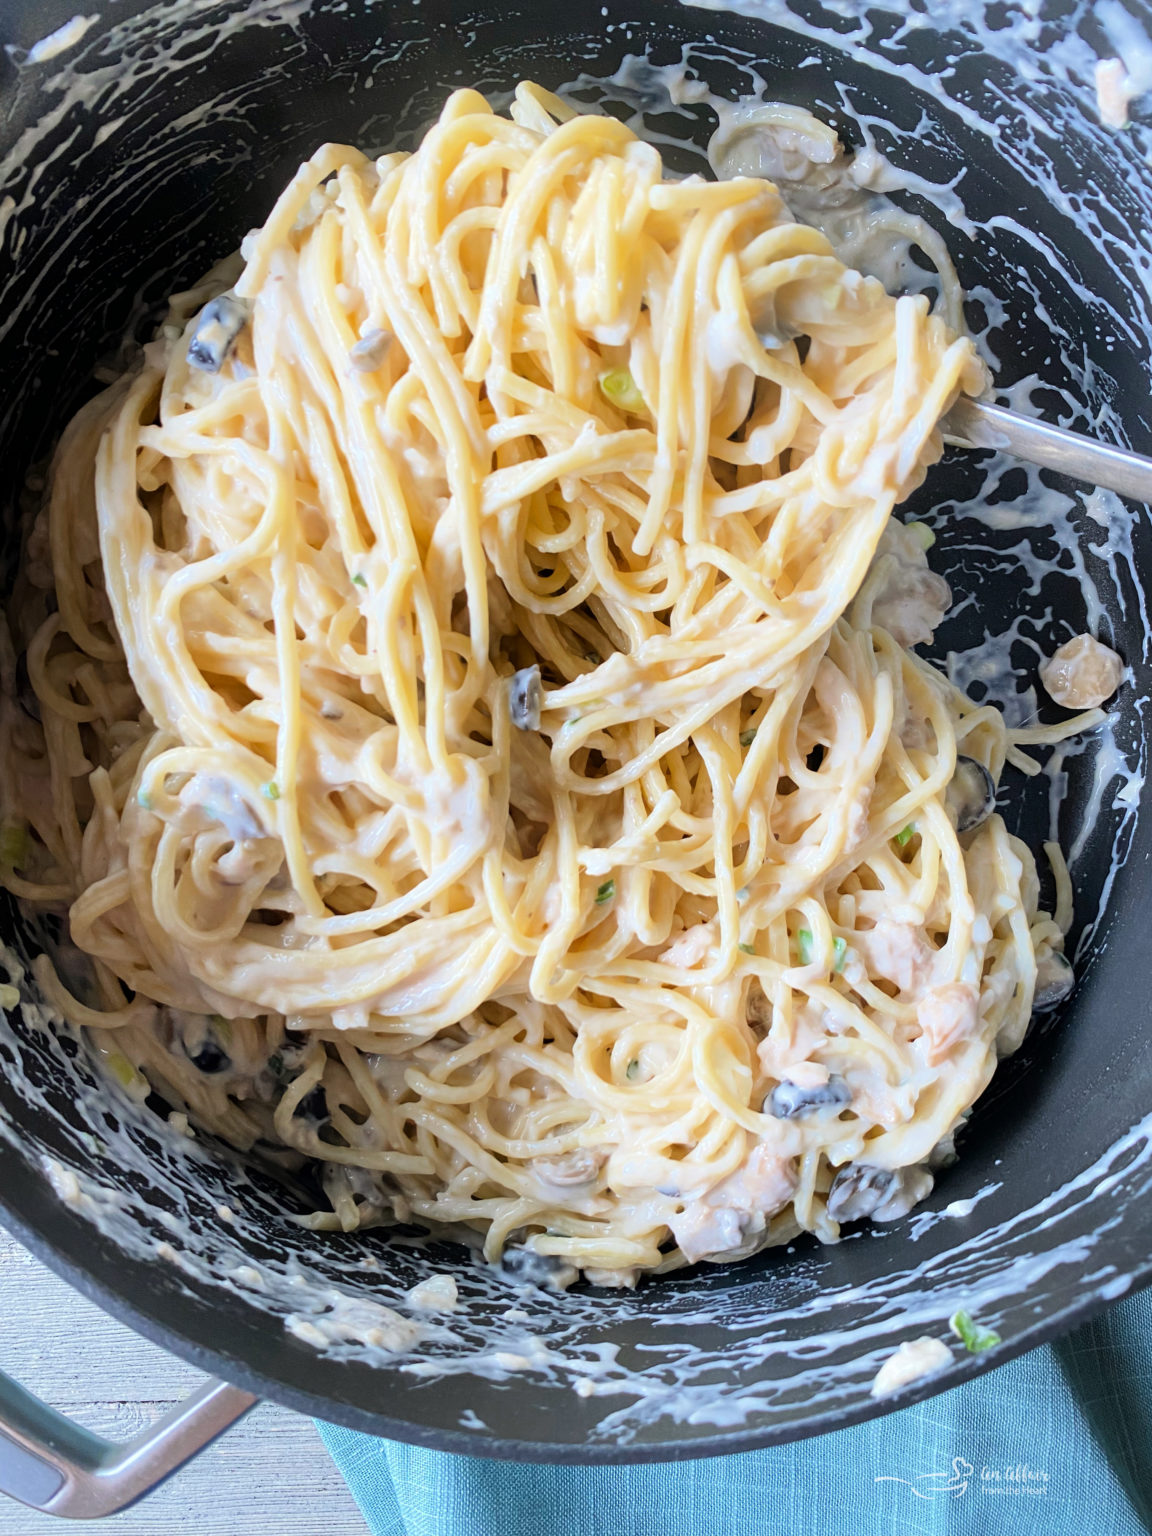 Tuna Spaghetti a delicious 20 minute meal from canned tuna